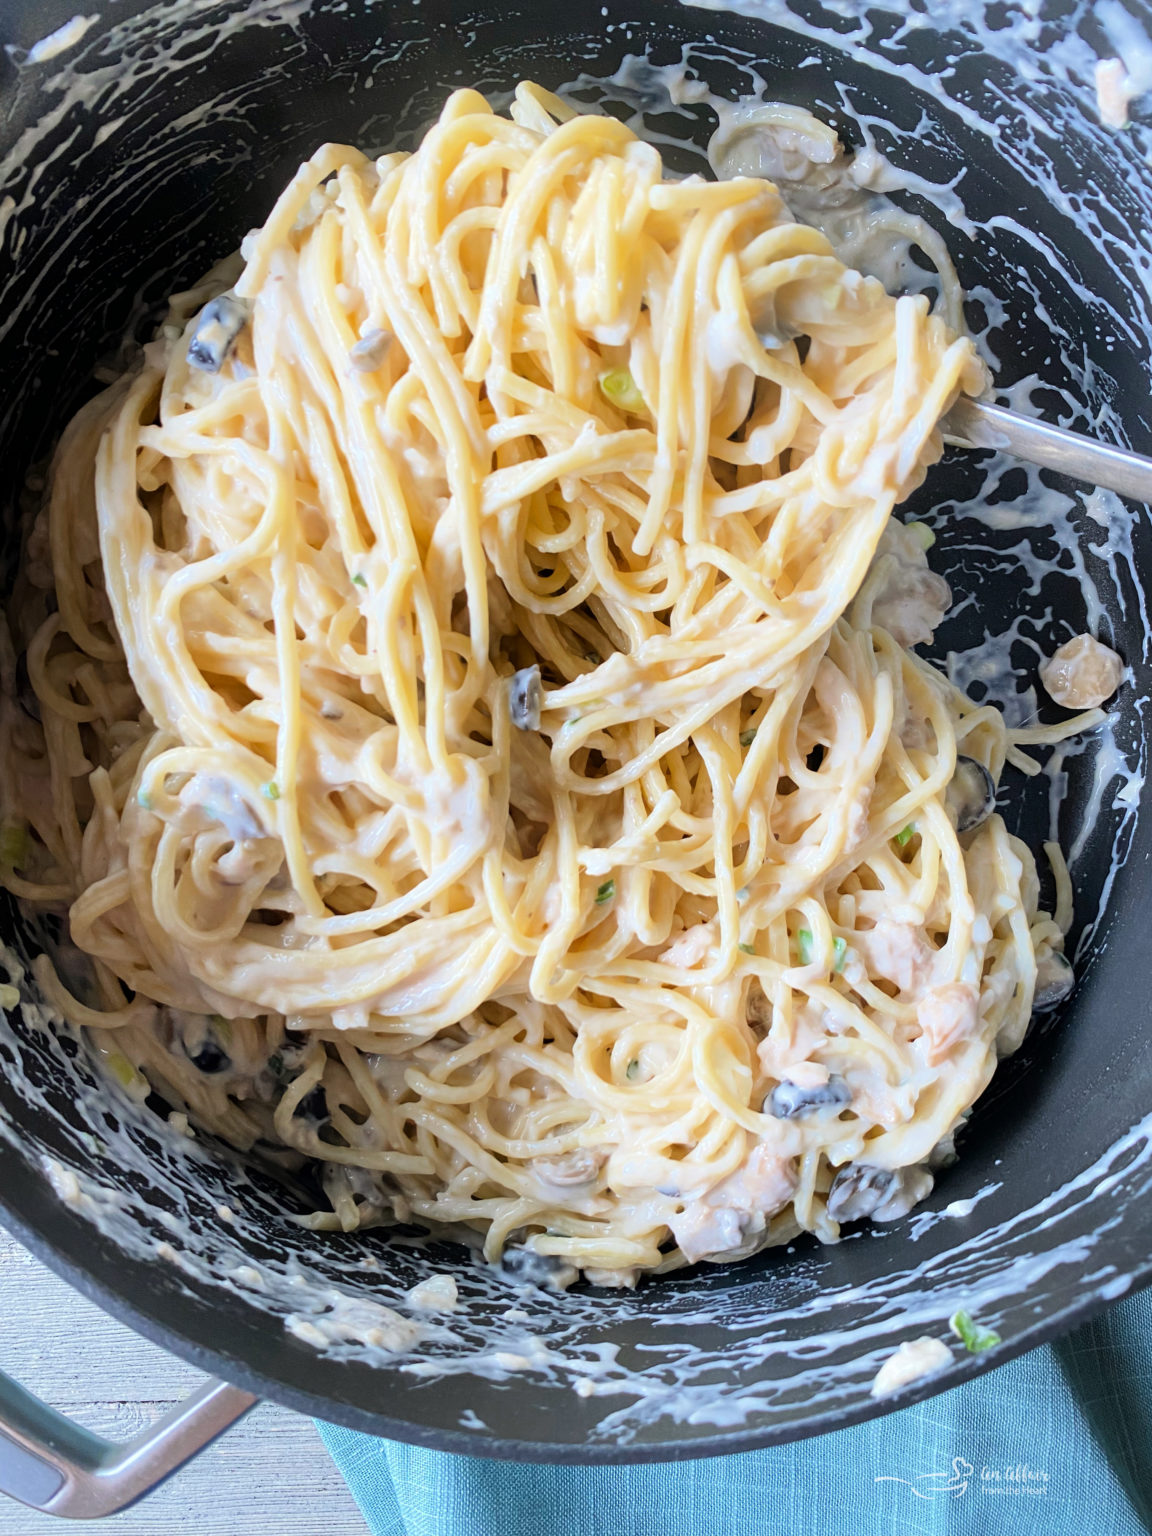 Tuna Spaghetti a delicious 20 minute meal from canned tuna